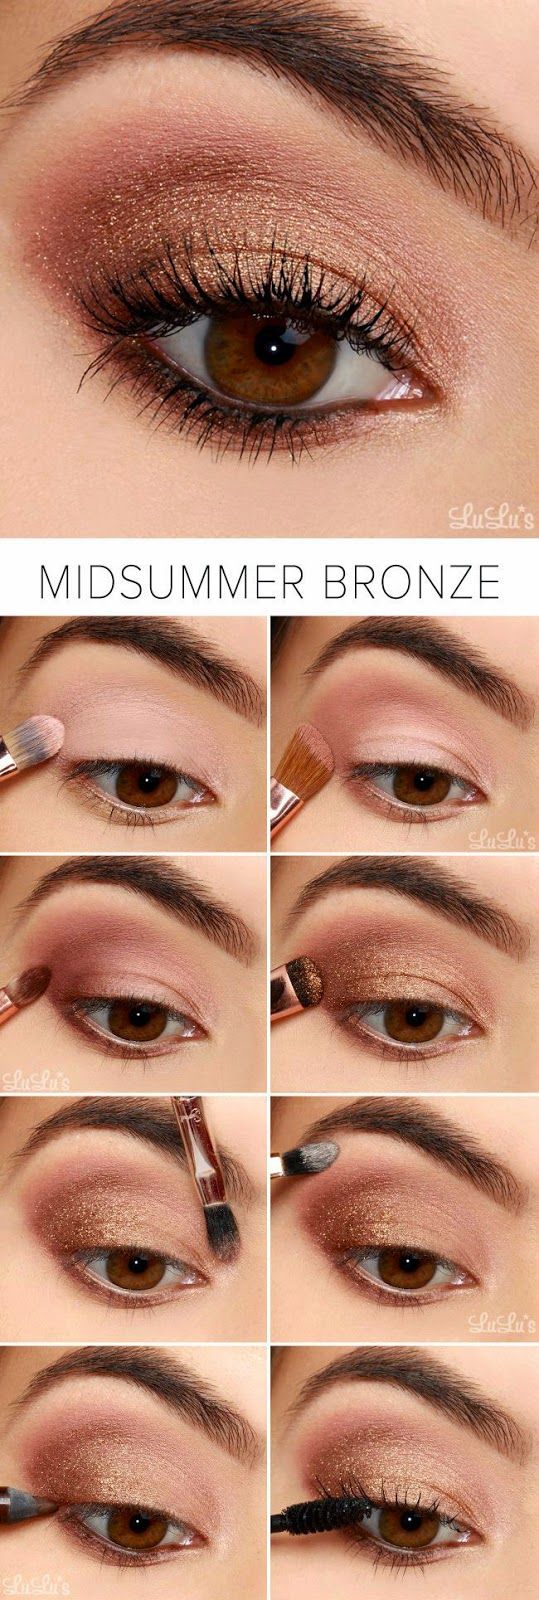 Latest Summer Makeup Ideas & Beauty Tips Cool Looks 2016-2017 (4)